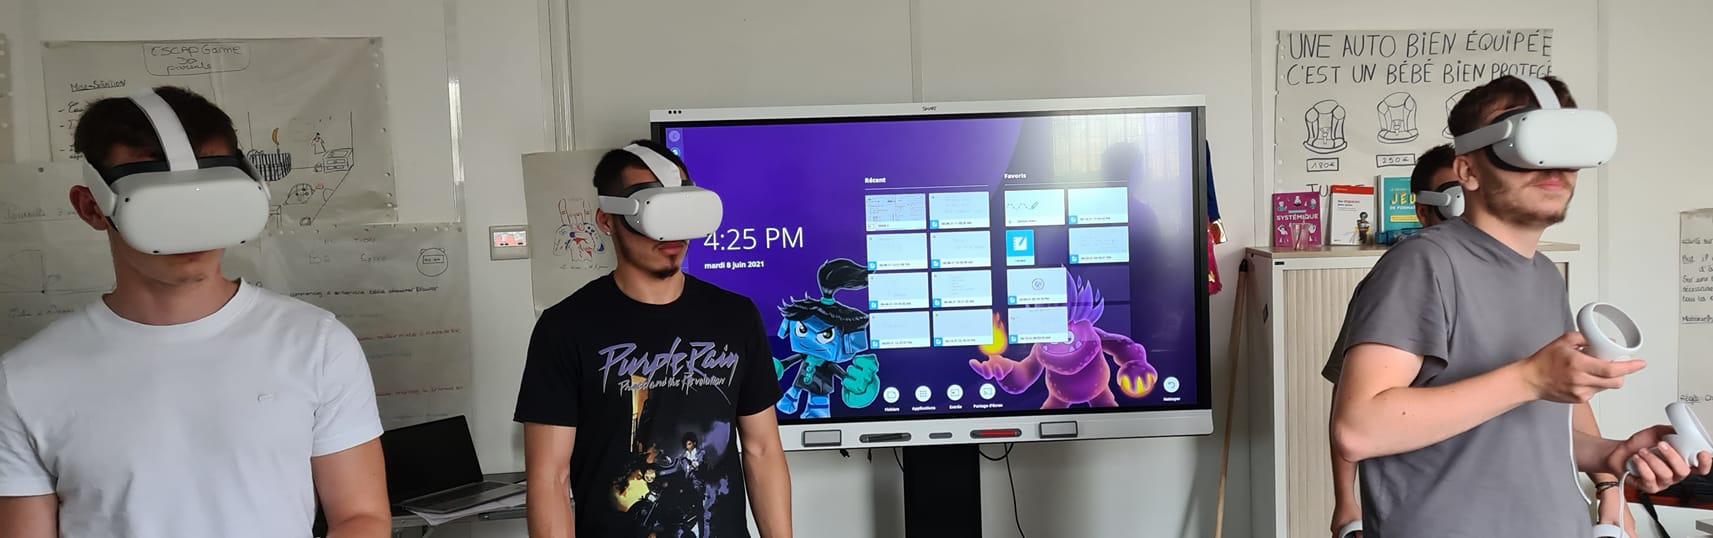 Casques VR et Écran smart interactif